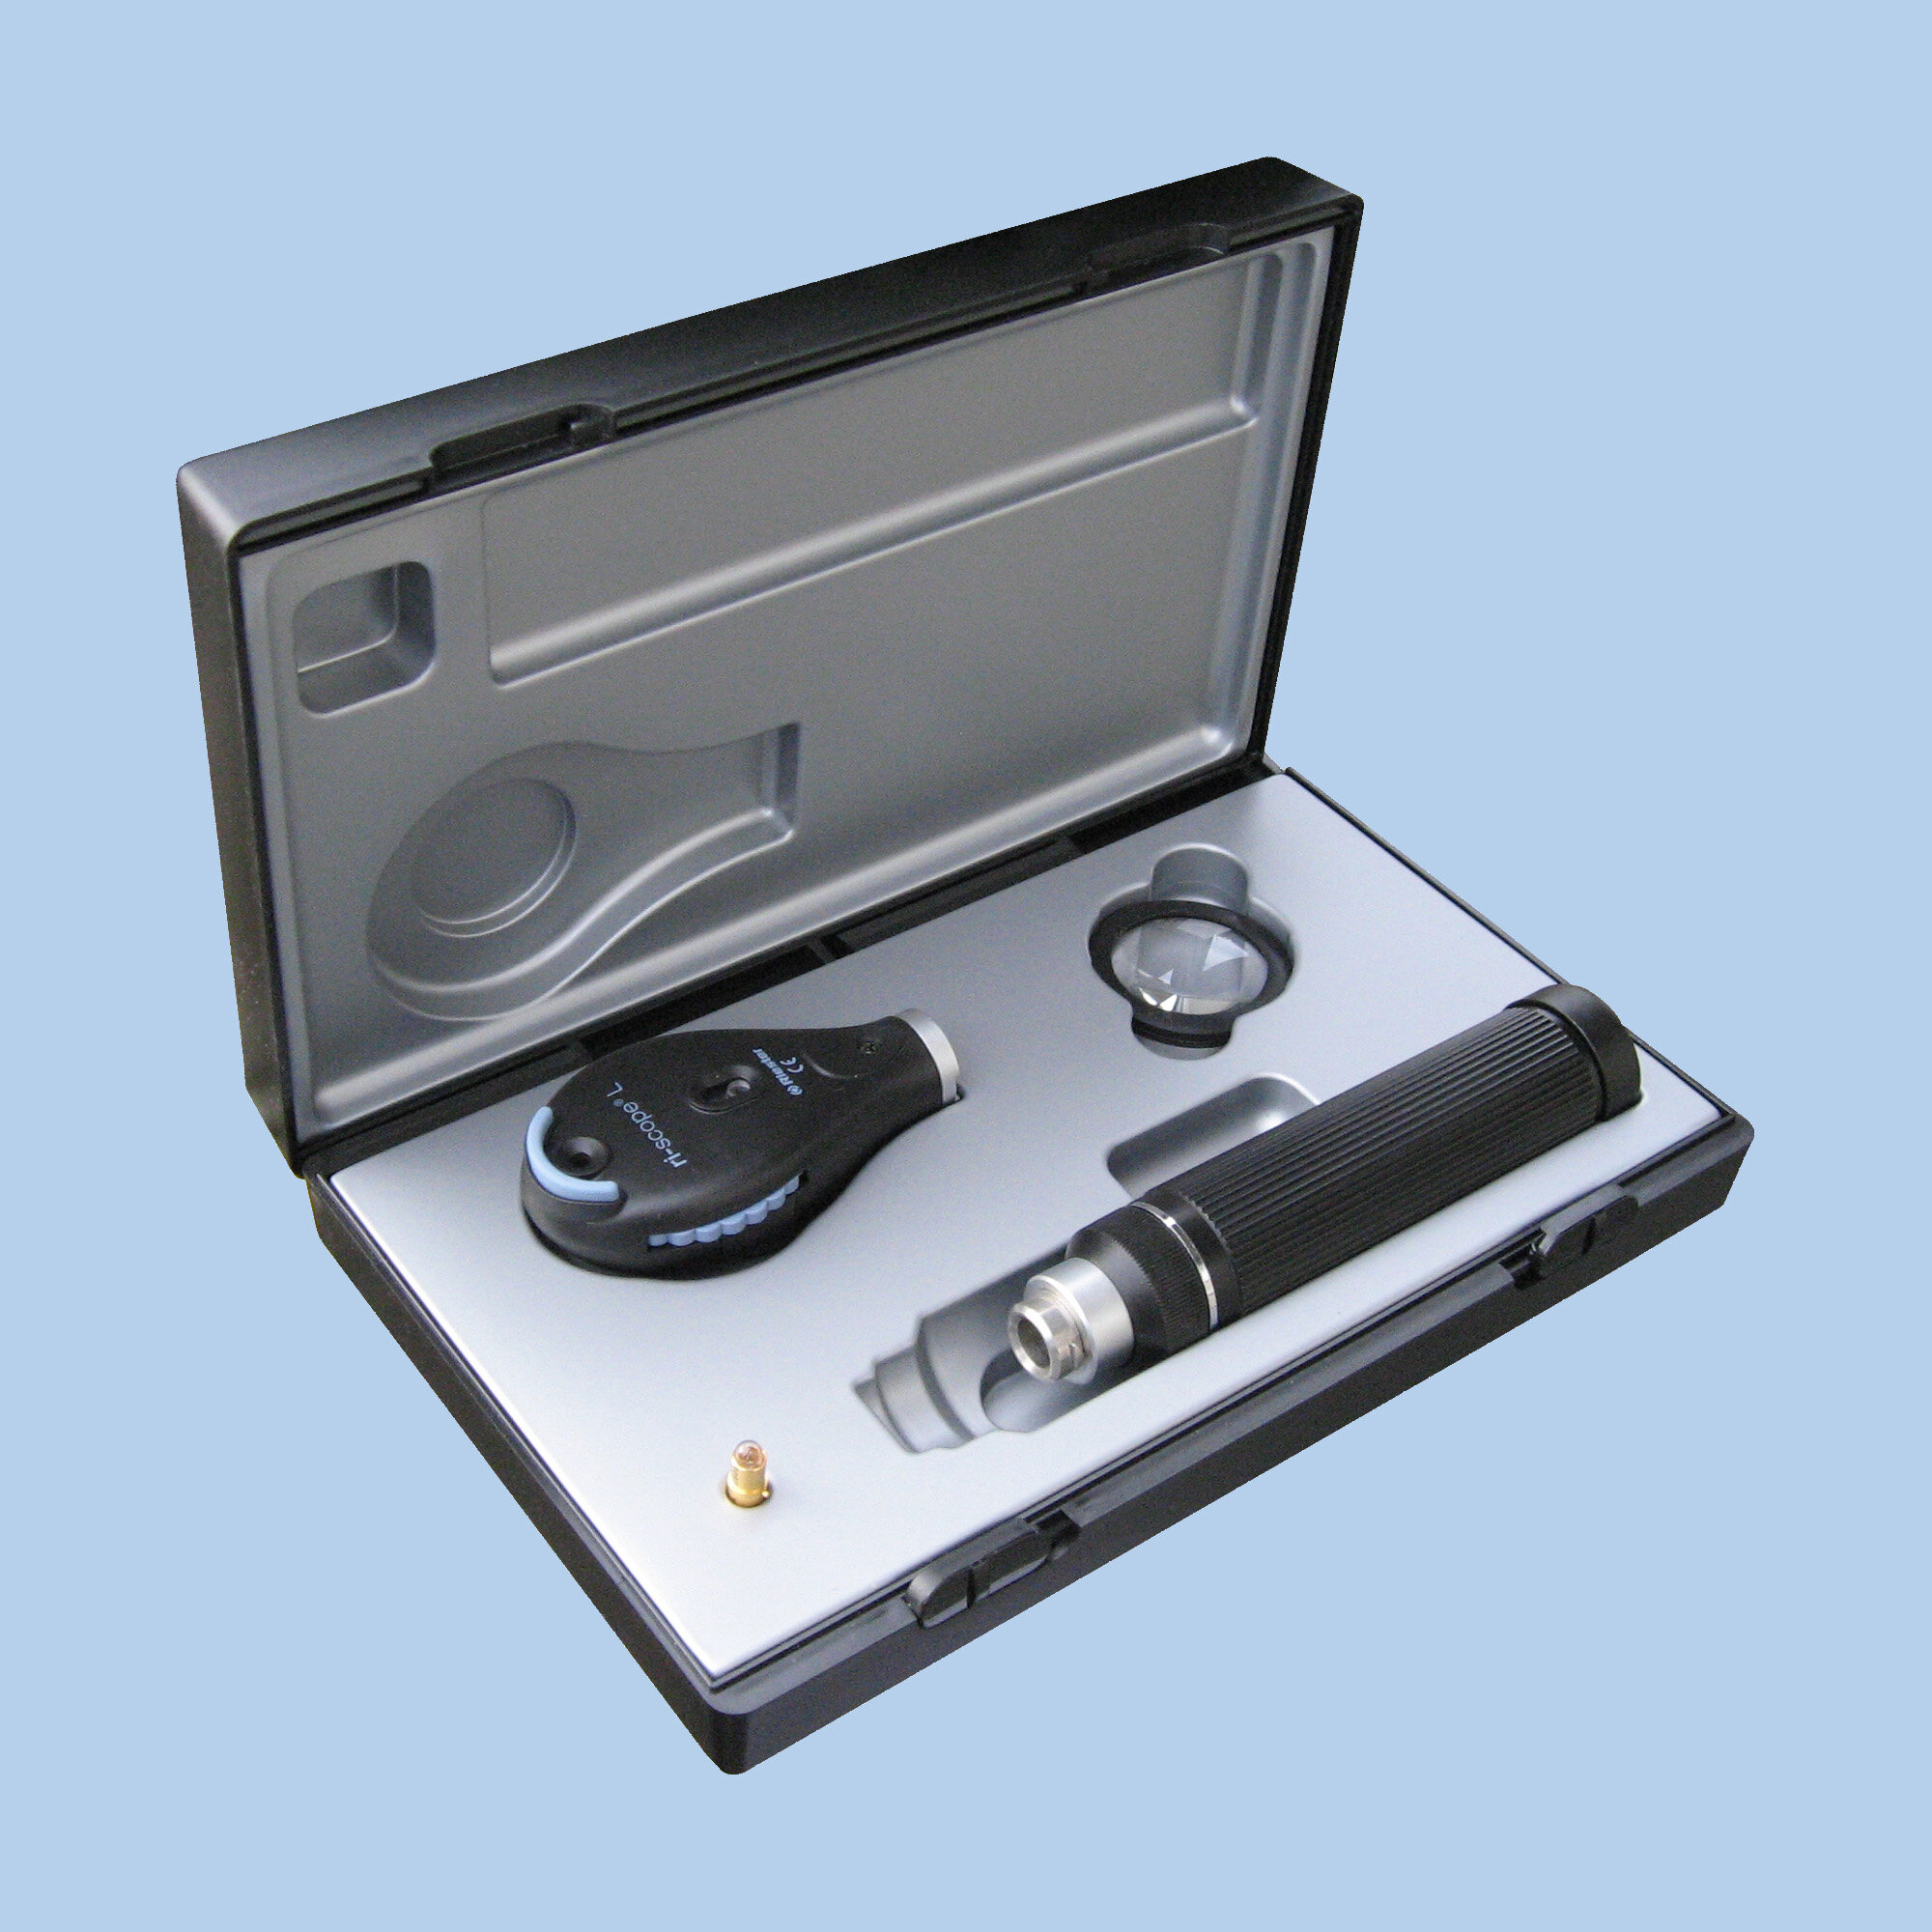 Ri-scope® офтальмоскоп L1, ксеноновое освещение XL 3,5 В, аккумуляторная рукоятка типа С для аккумулятора ri-accu® L для зарядки в ri-charger® L